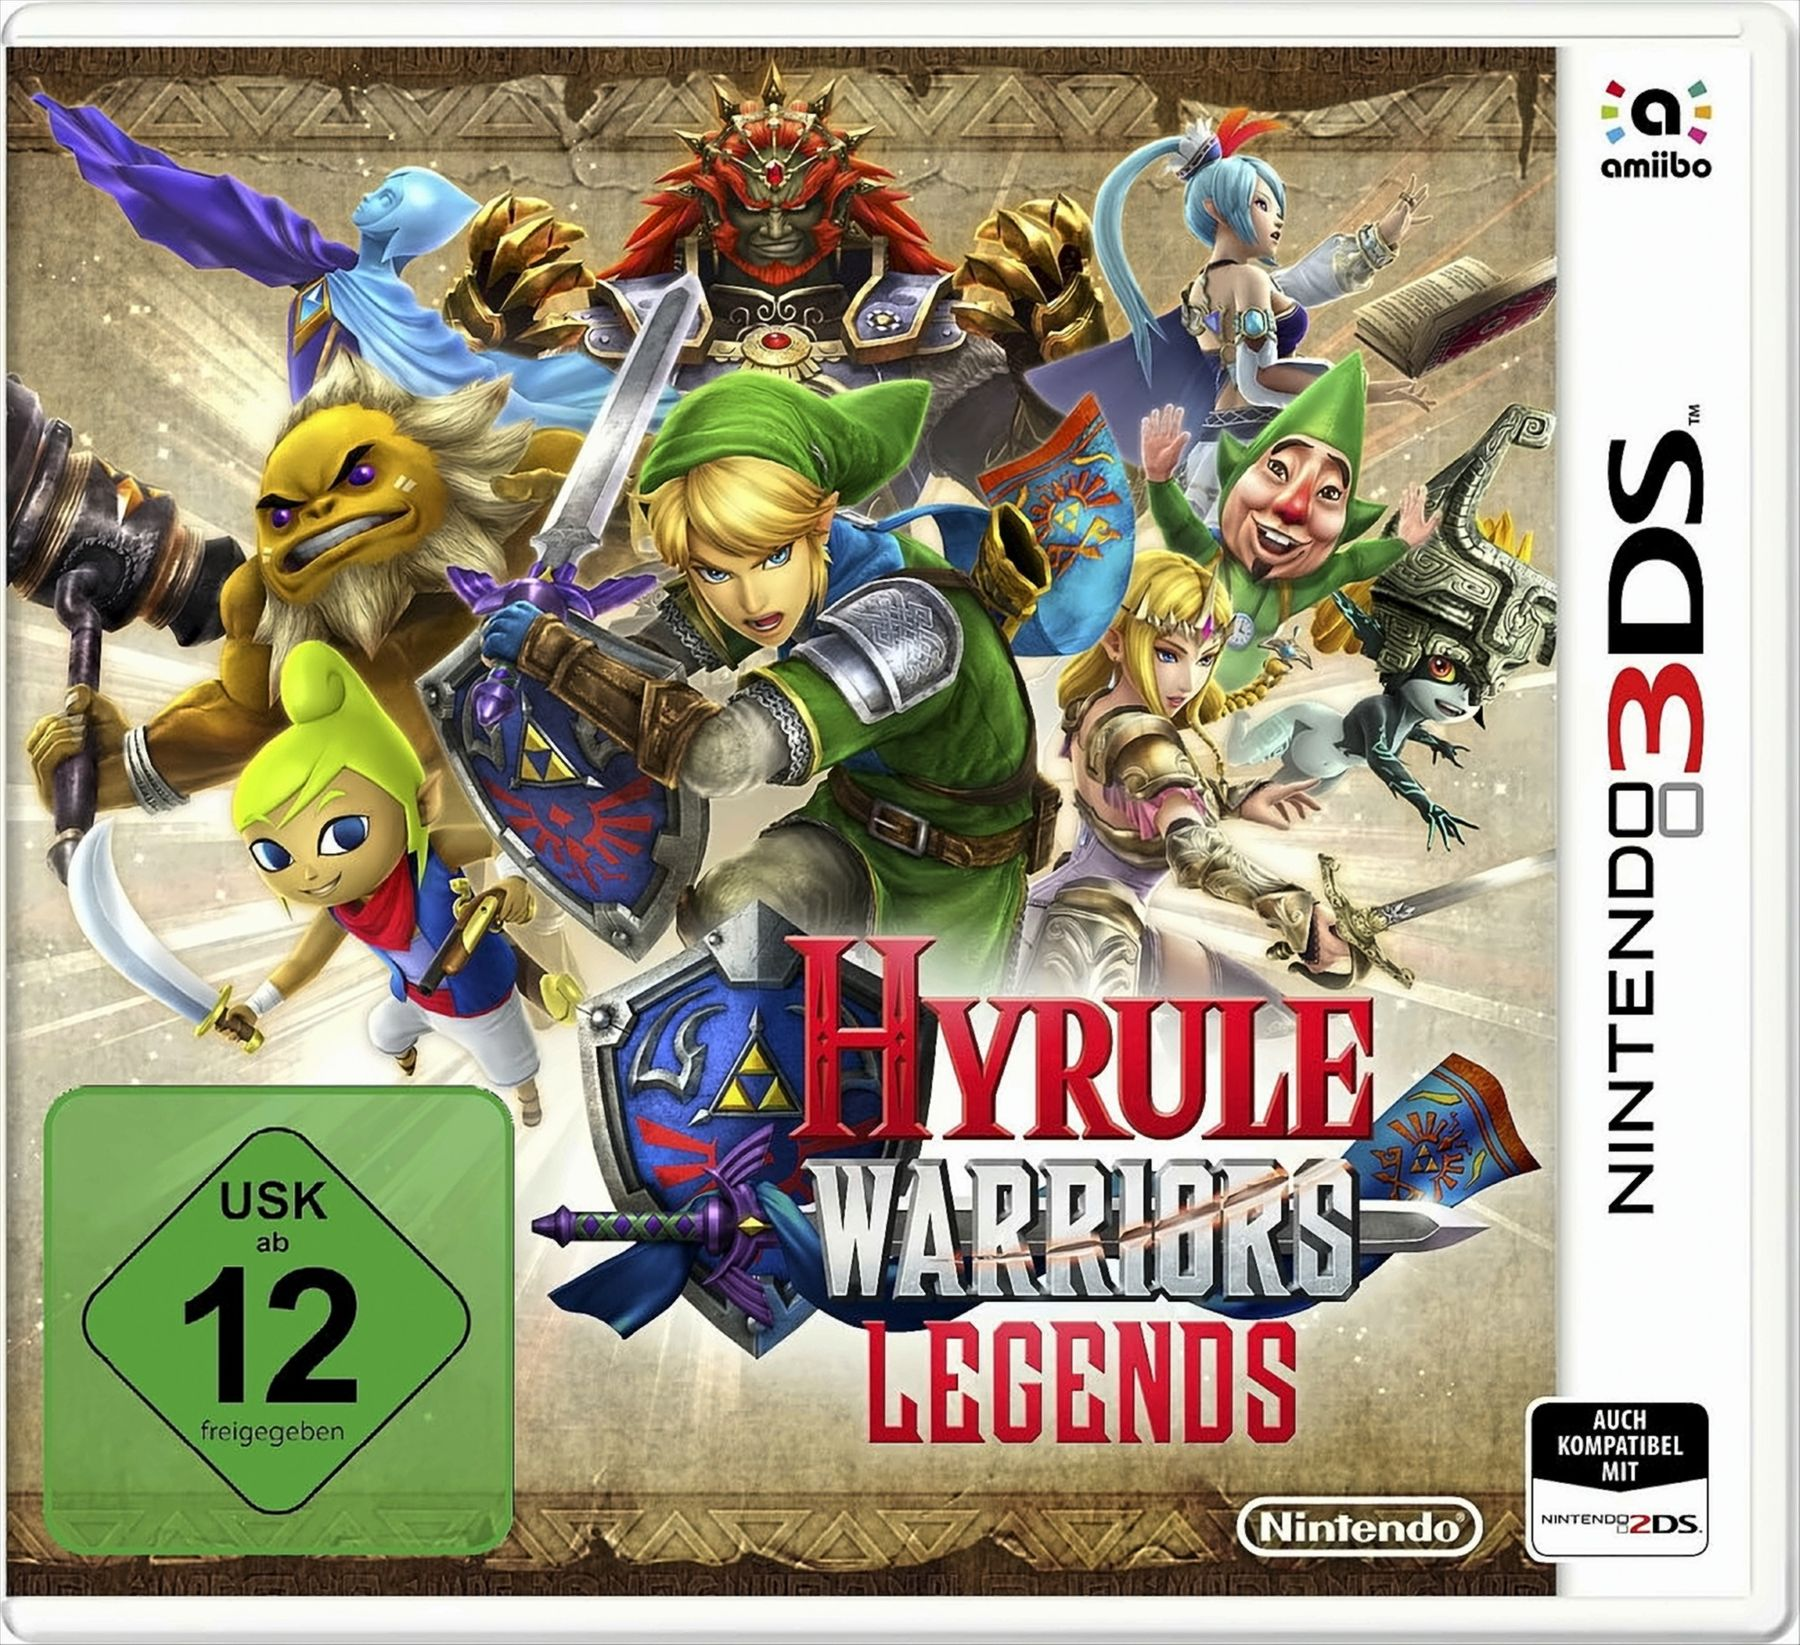 Legends 3DS] Hyrule - Warriors: [Nintendo